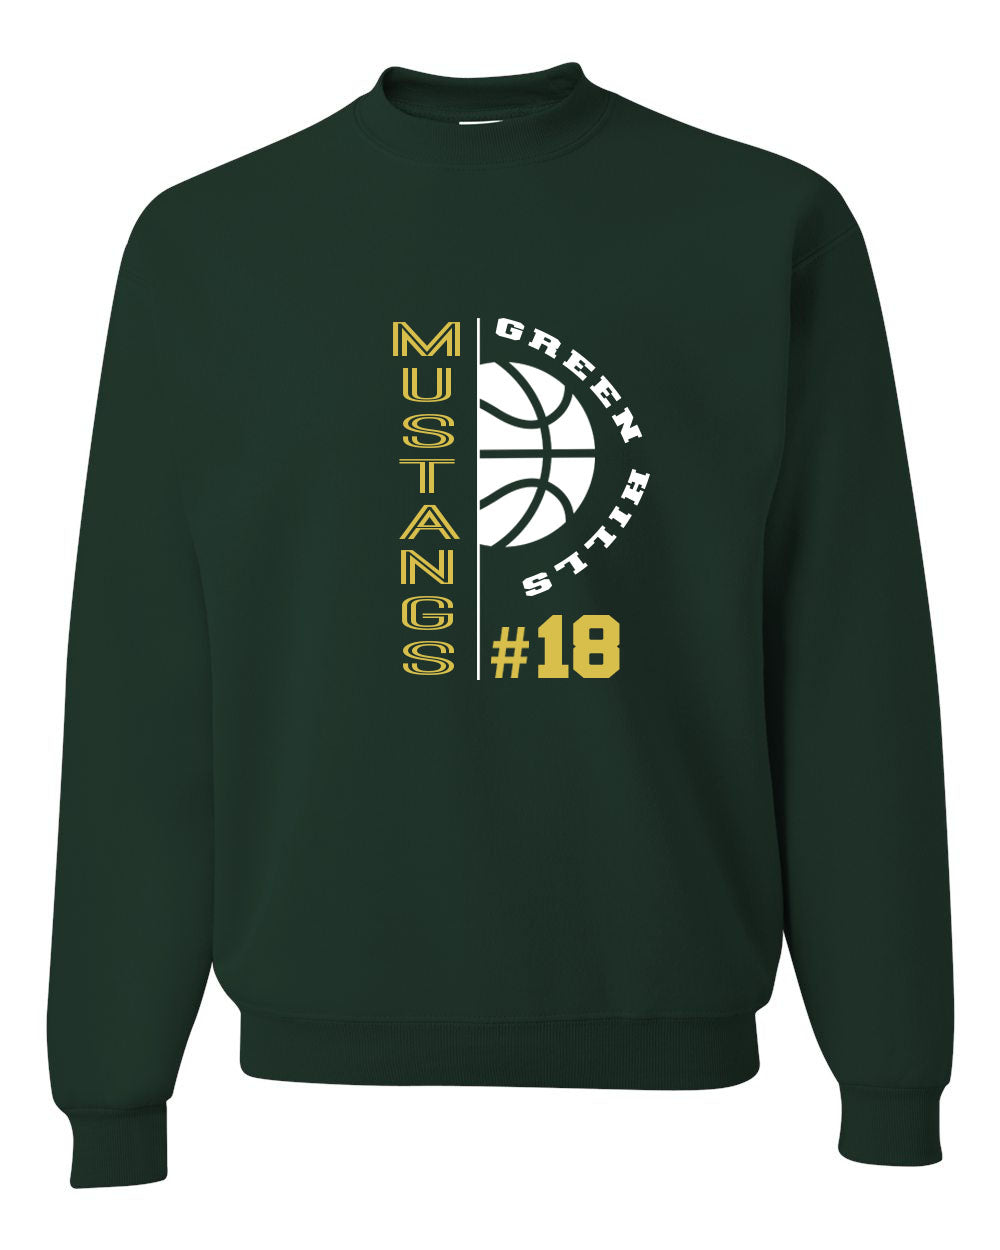 Green Hills Basketball Design 4 non hooded sweatshirt